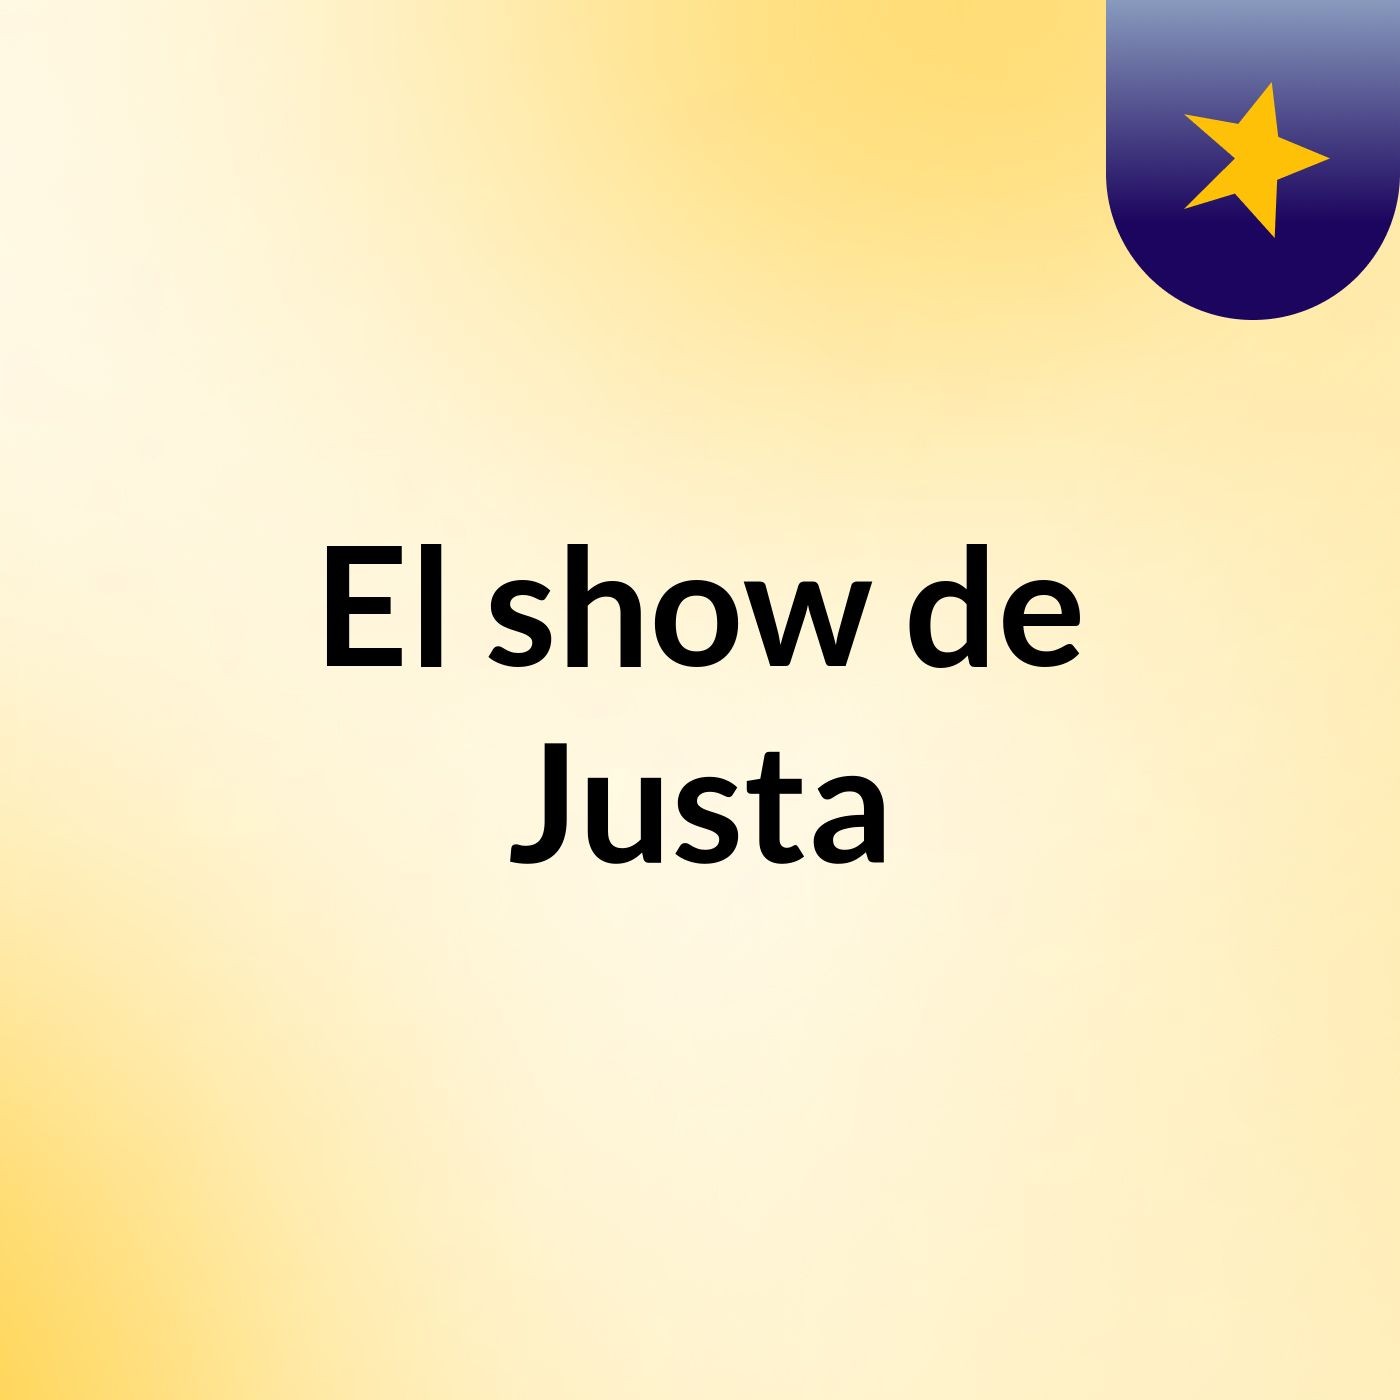 El show de Justa